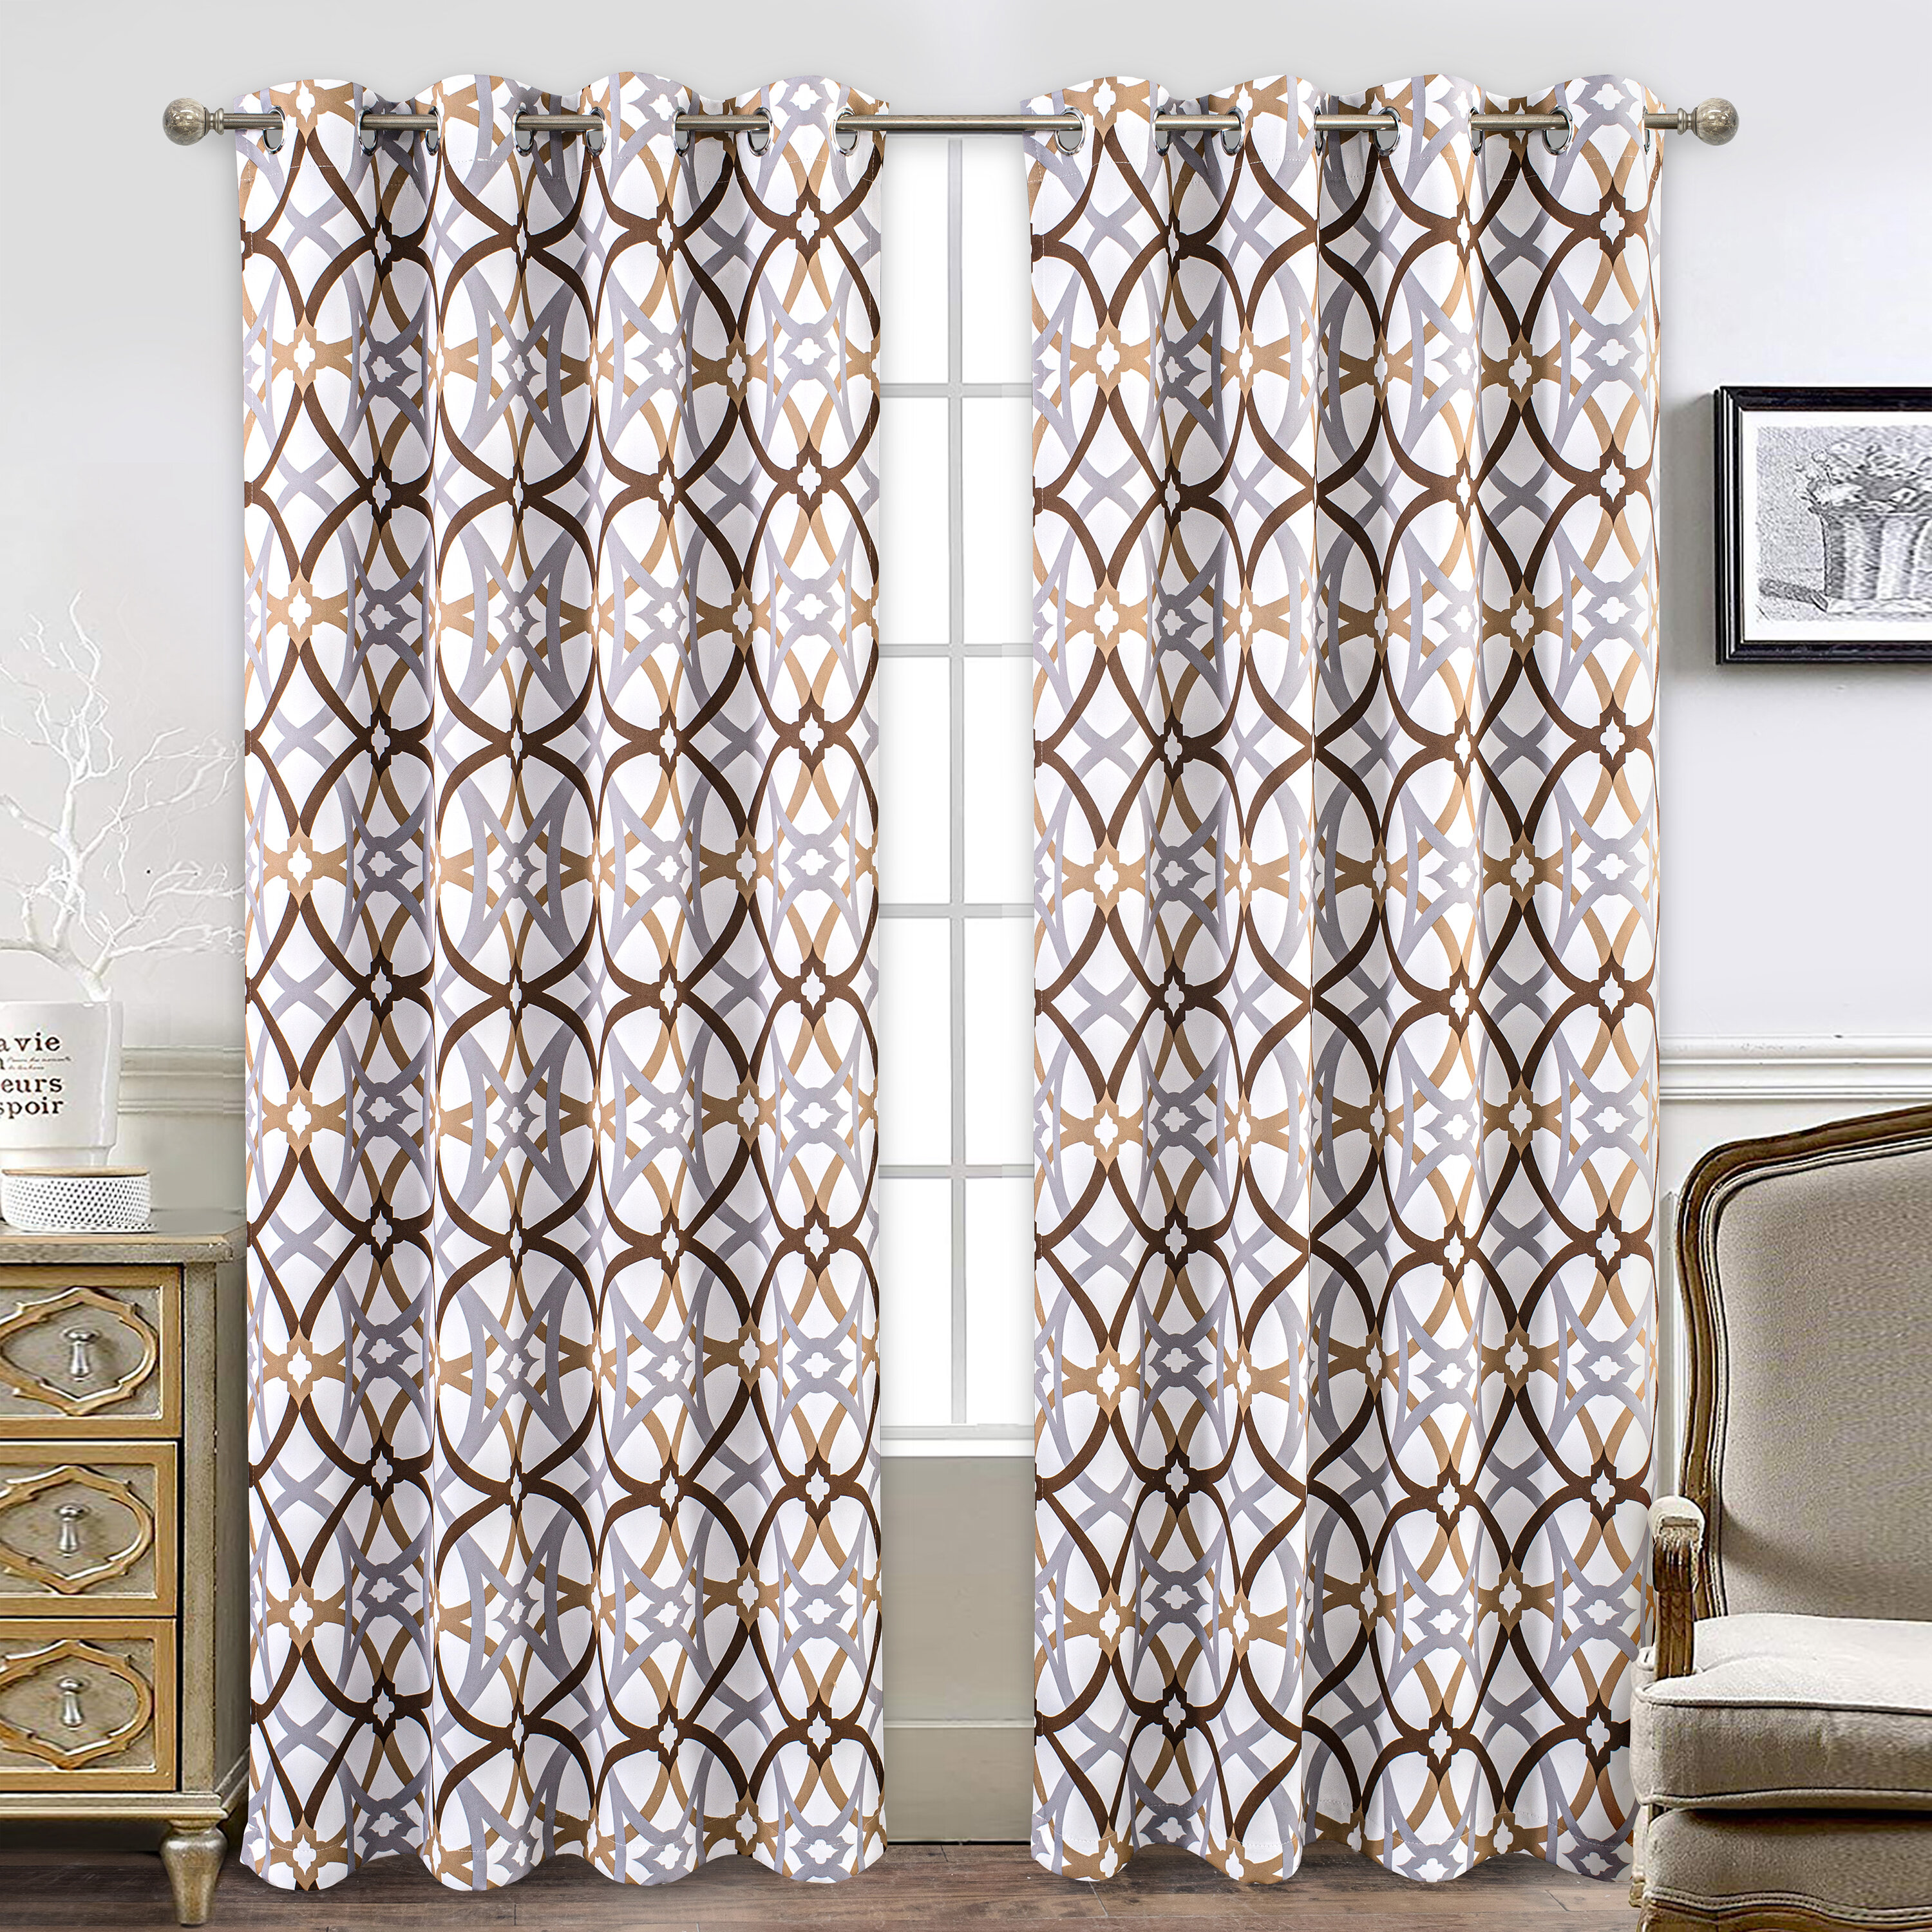 Pair Geometric Alexander Blackout Weave Window Curtain Panels With Grommets 